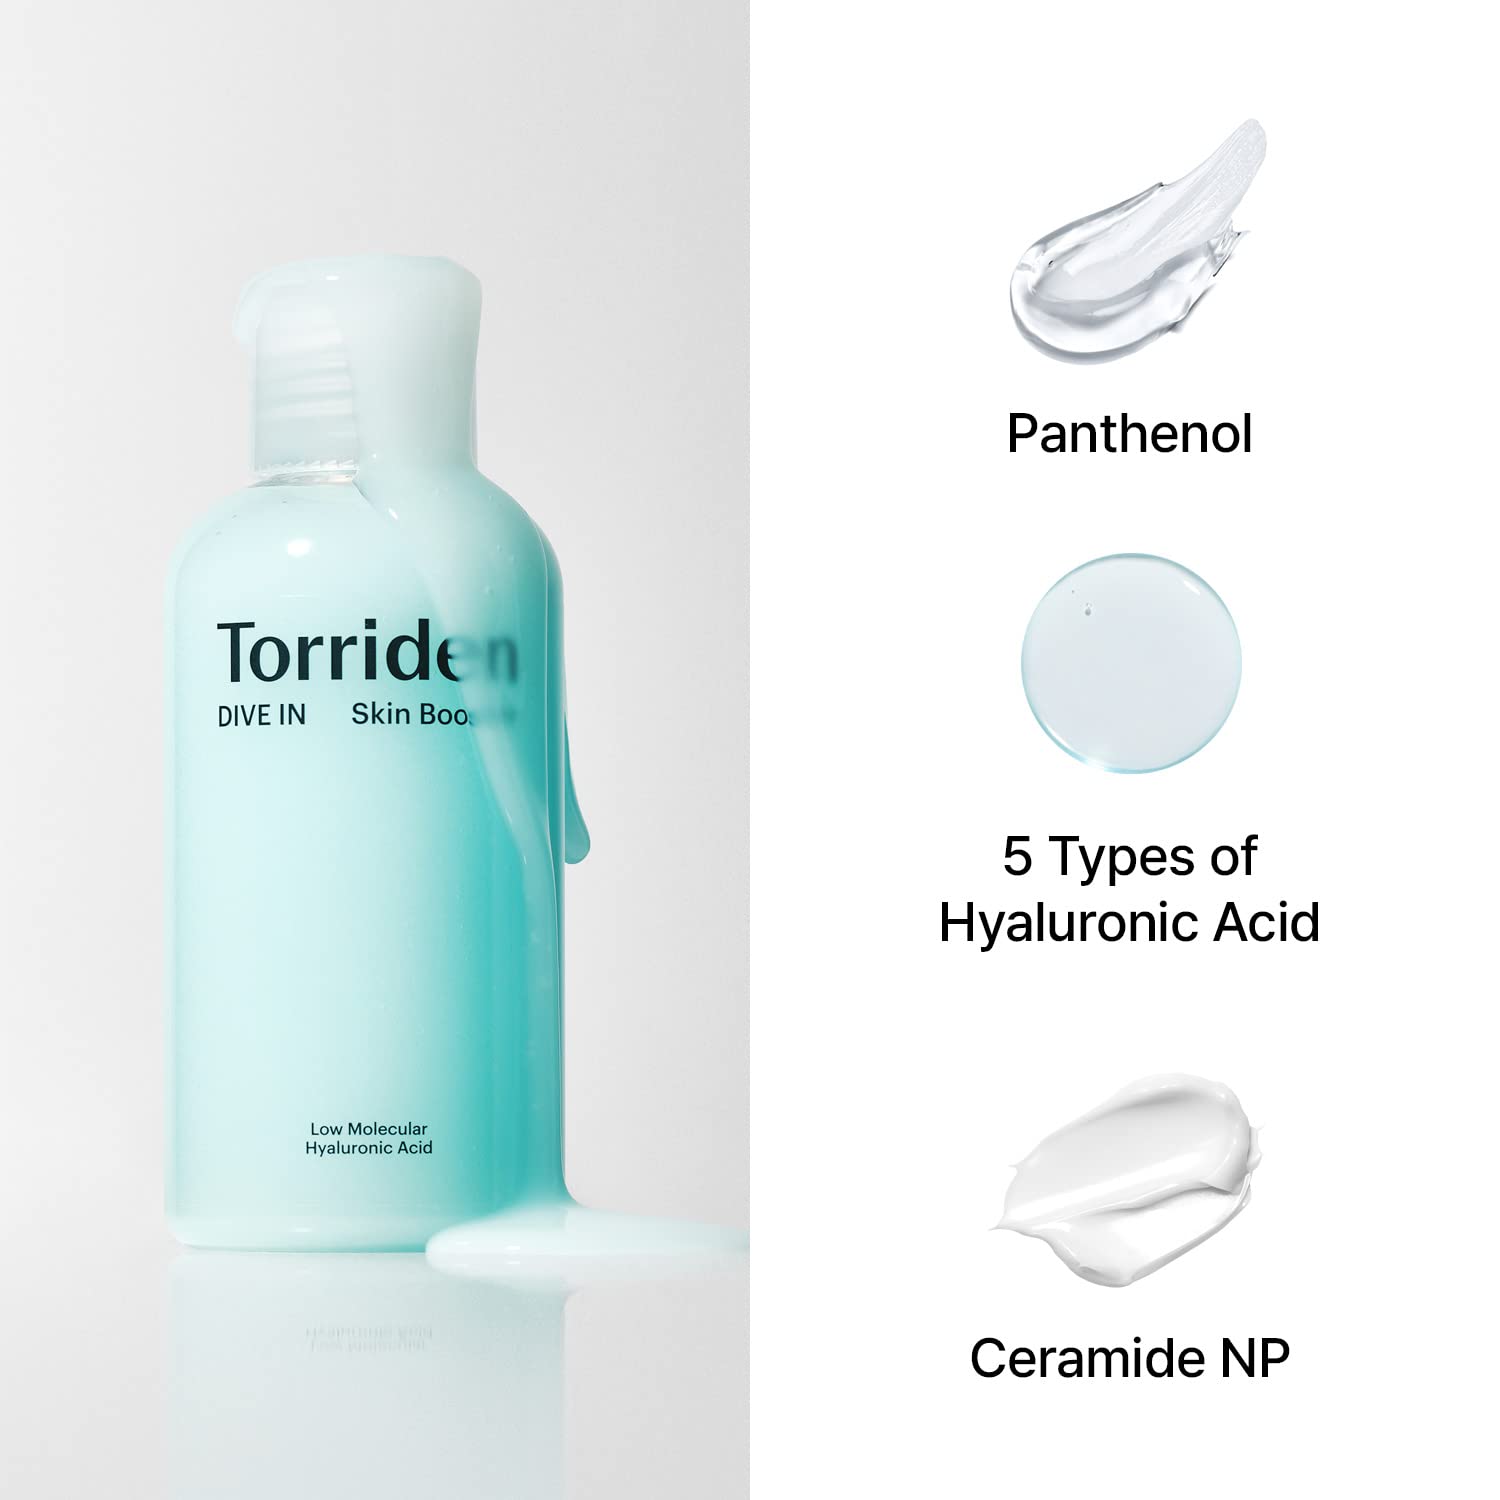 Torriden Dive-In Low Molecular Hyaluronic Acid Skin Booster | Olive  Kollection